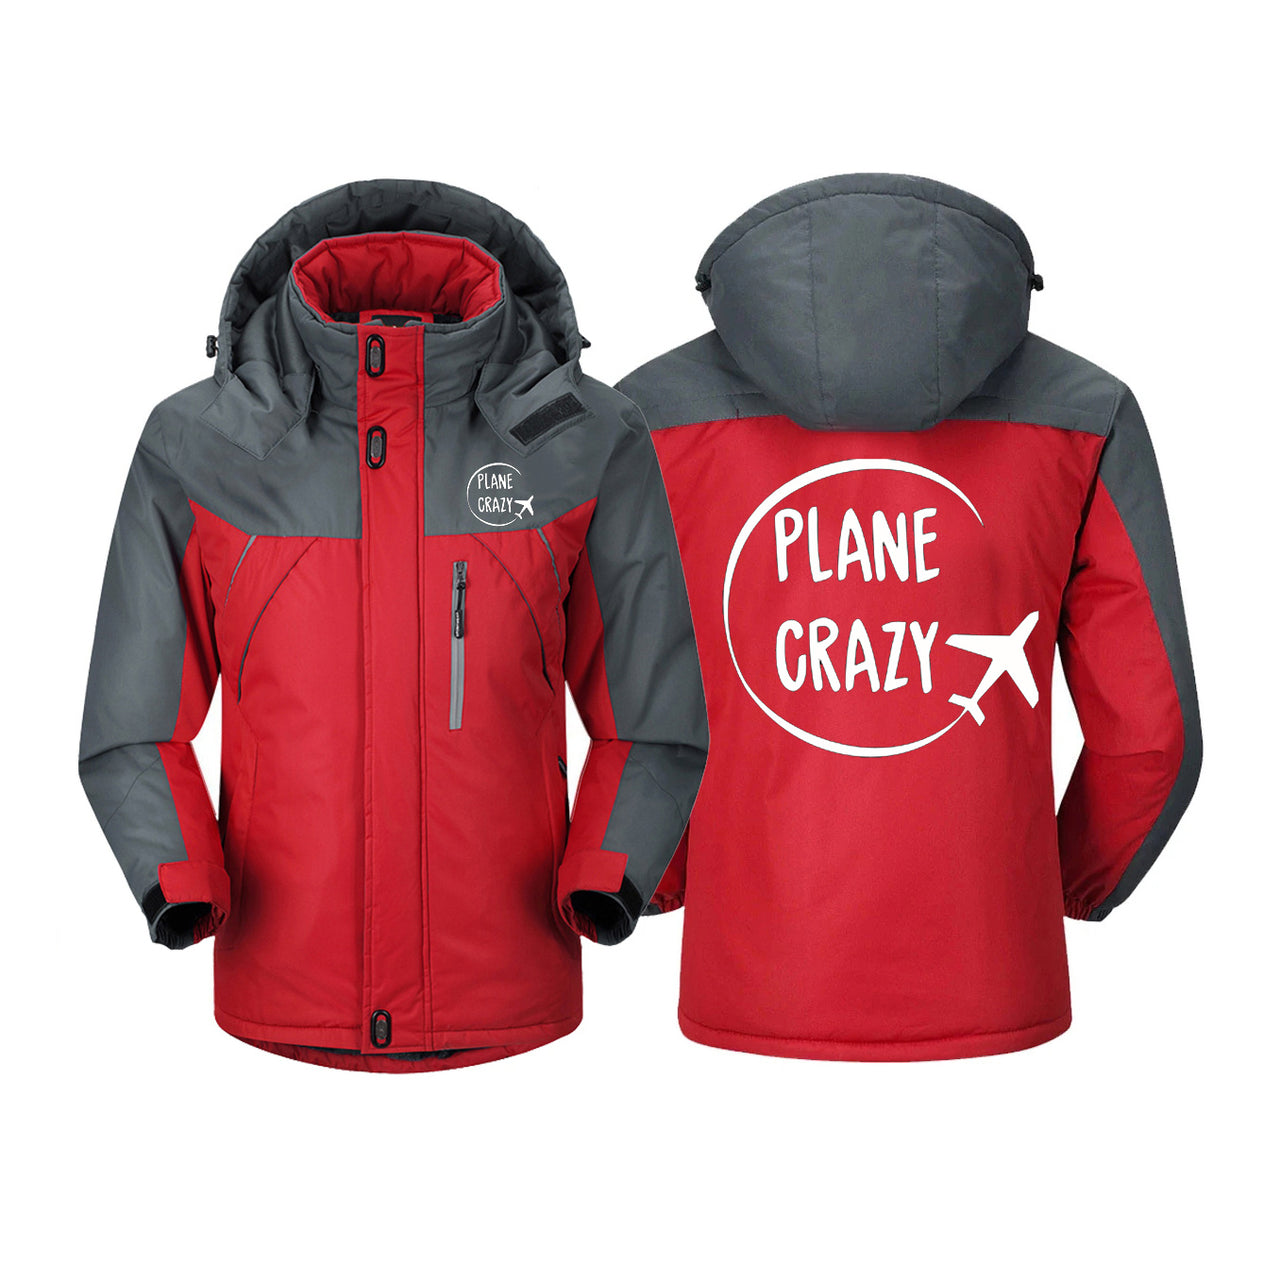 Plane Crazy Designed Thick Winter Jackets